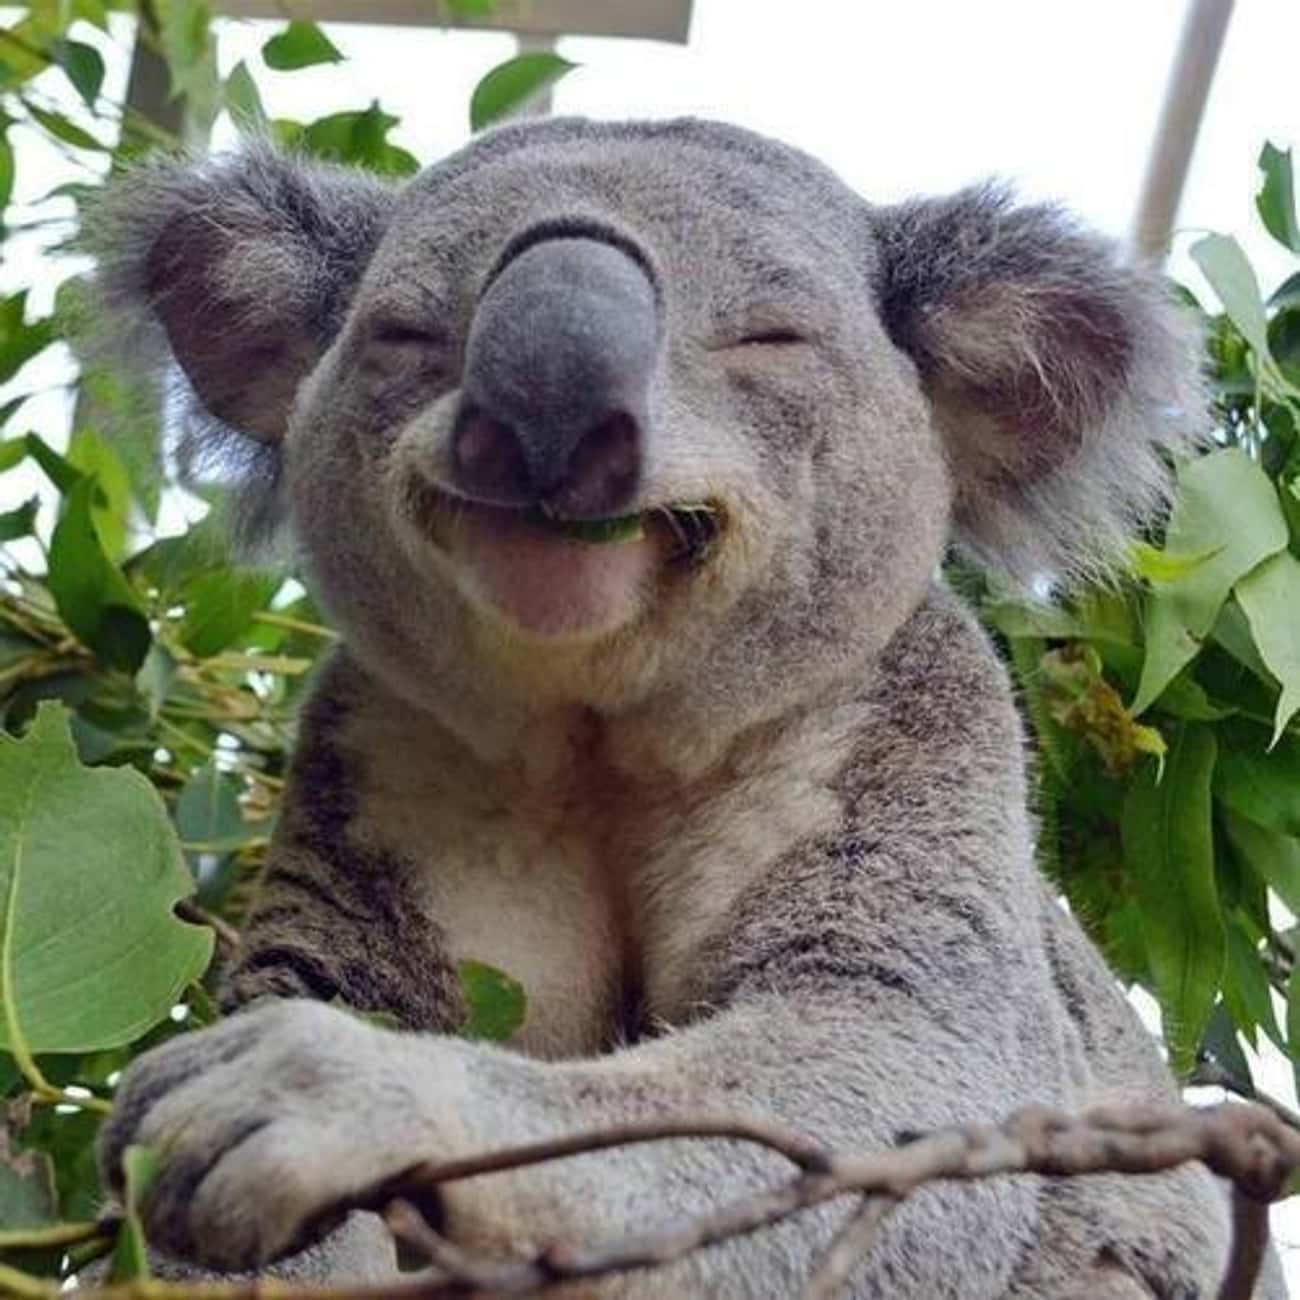 This Relaxed Koala